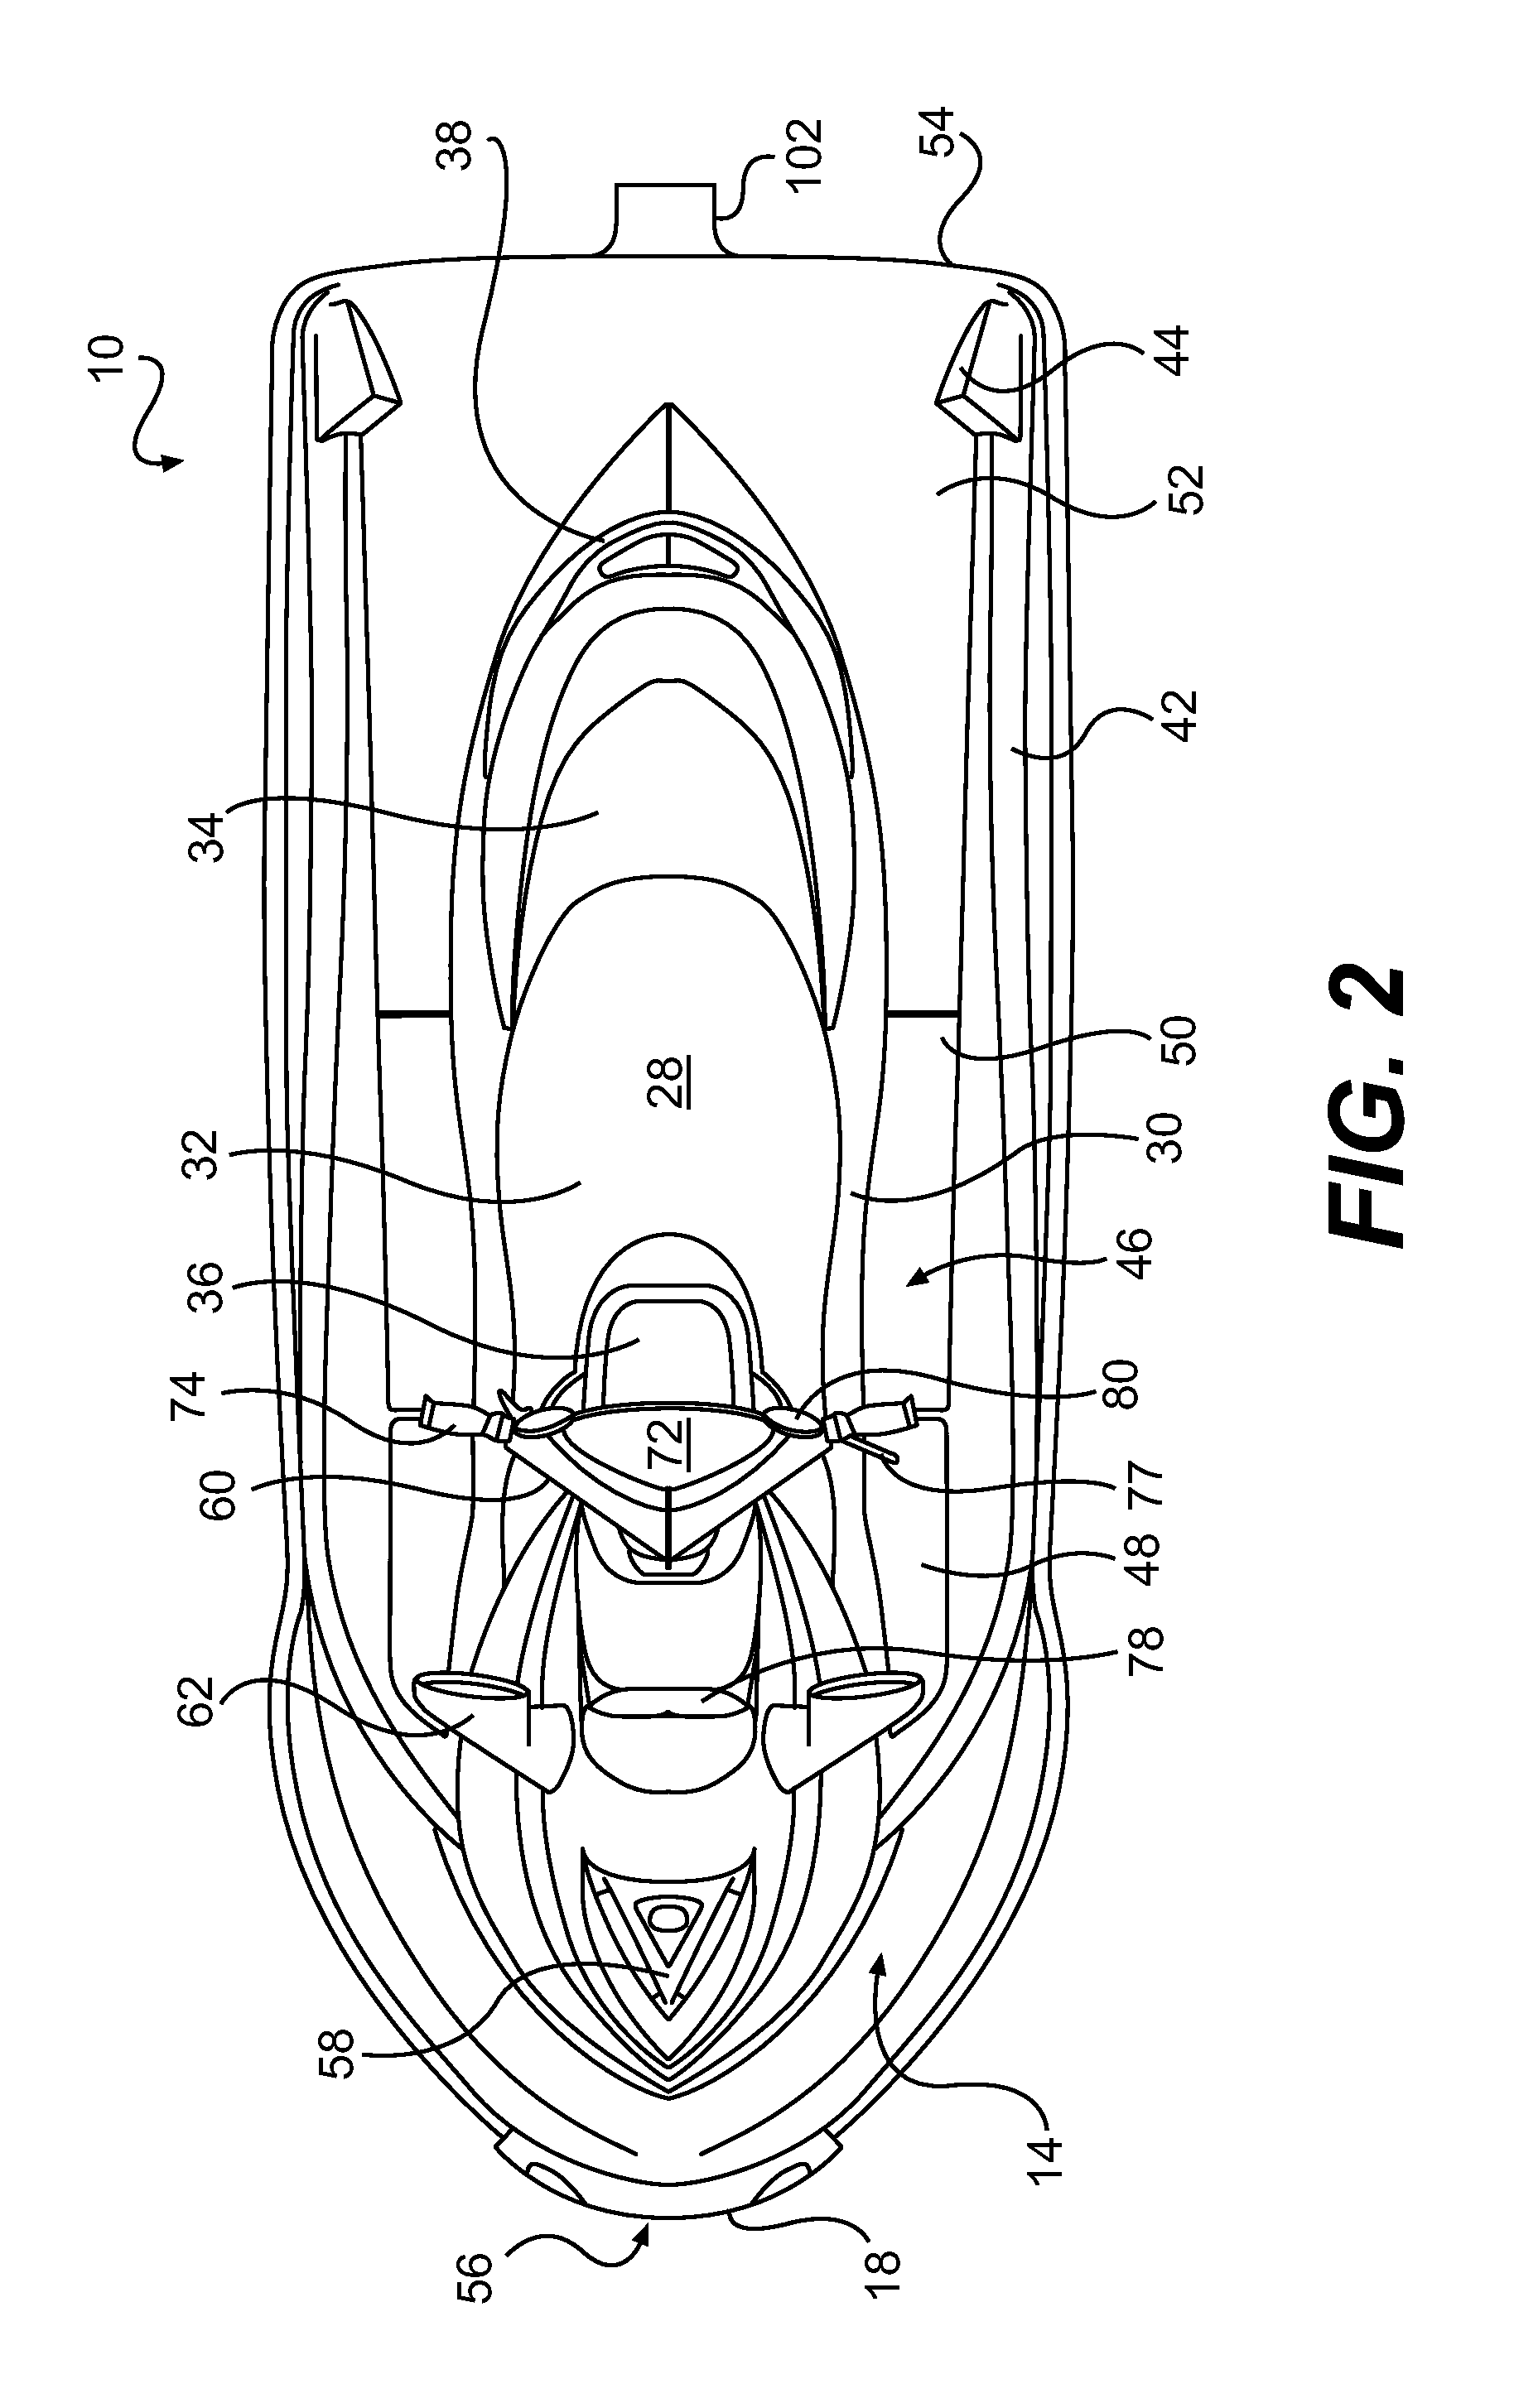 Jet propulsion trim and reverse system